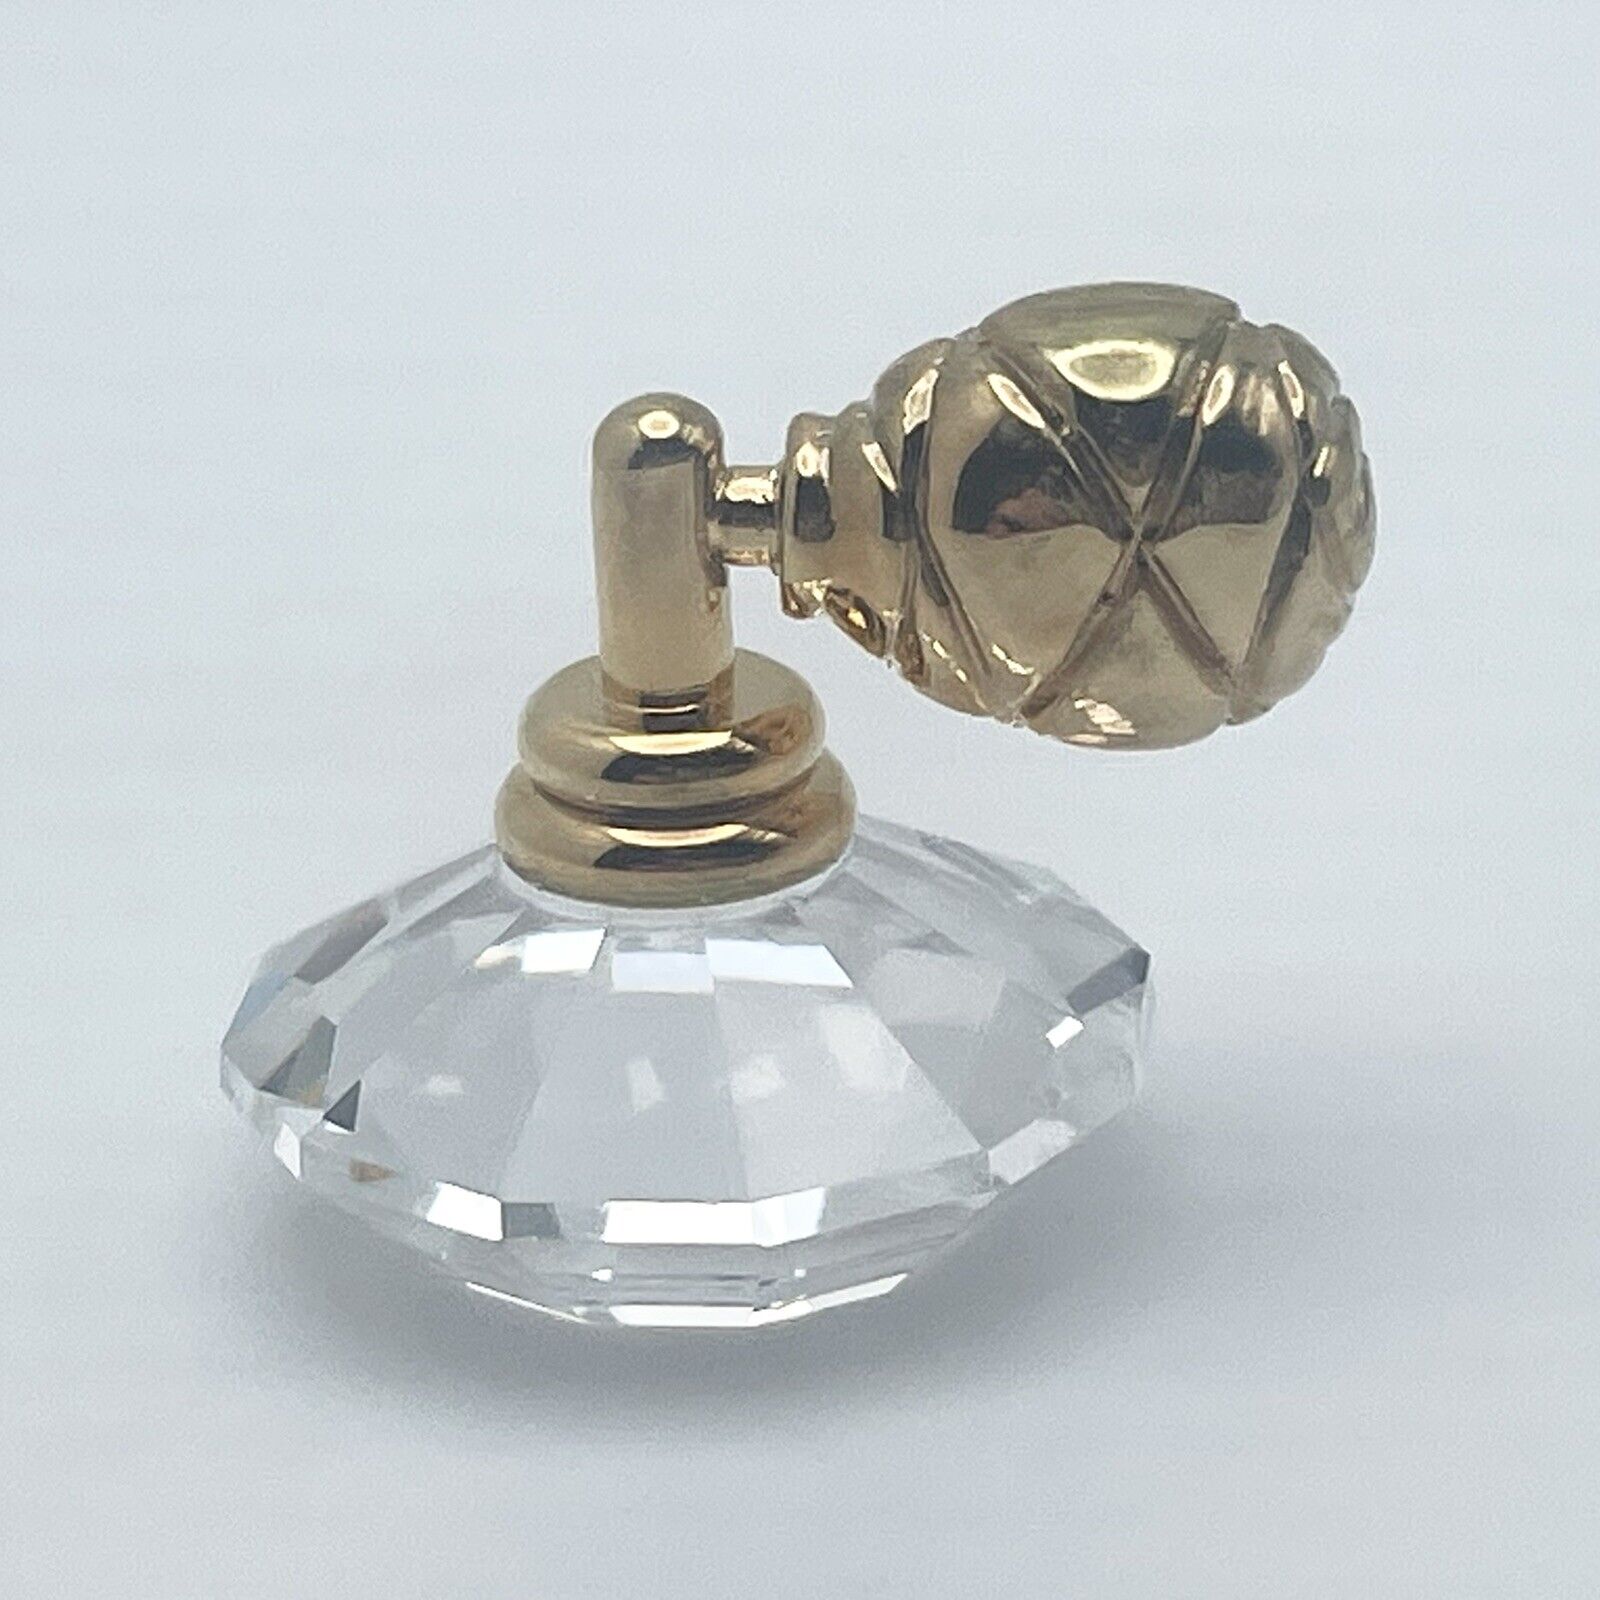 Swarovski Crystal Memories 18K Plated Miniature Perfume Bottle Atomizer Figurine